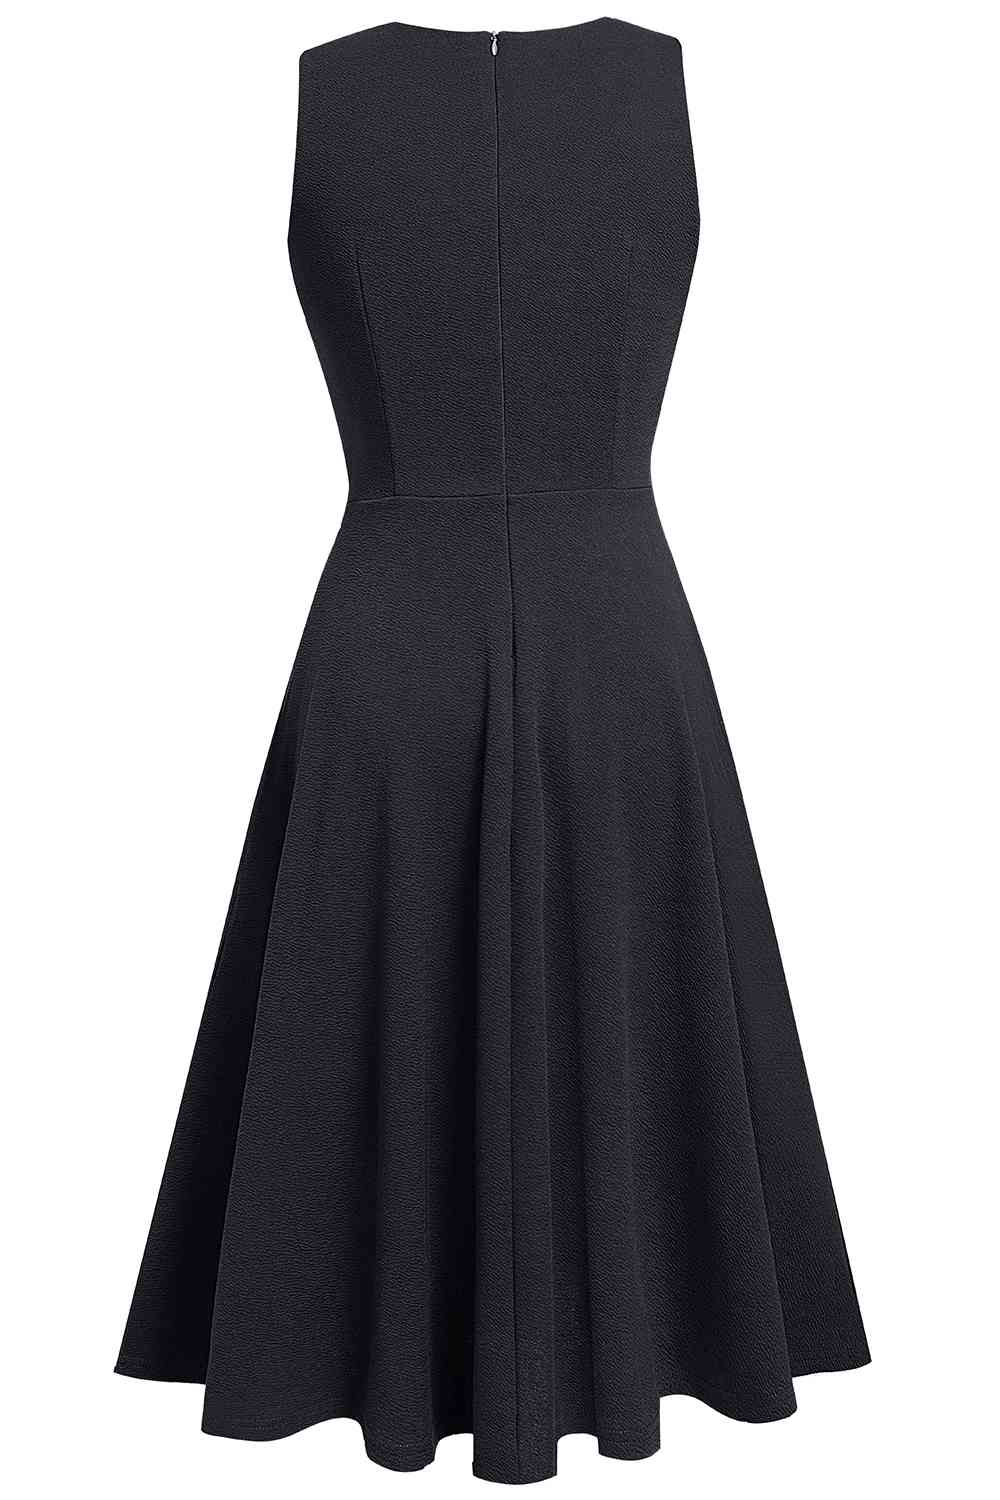 Round Neck Sleeveless Lace Trim Dress - All Dresses - Dresses - 6 - 2024